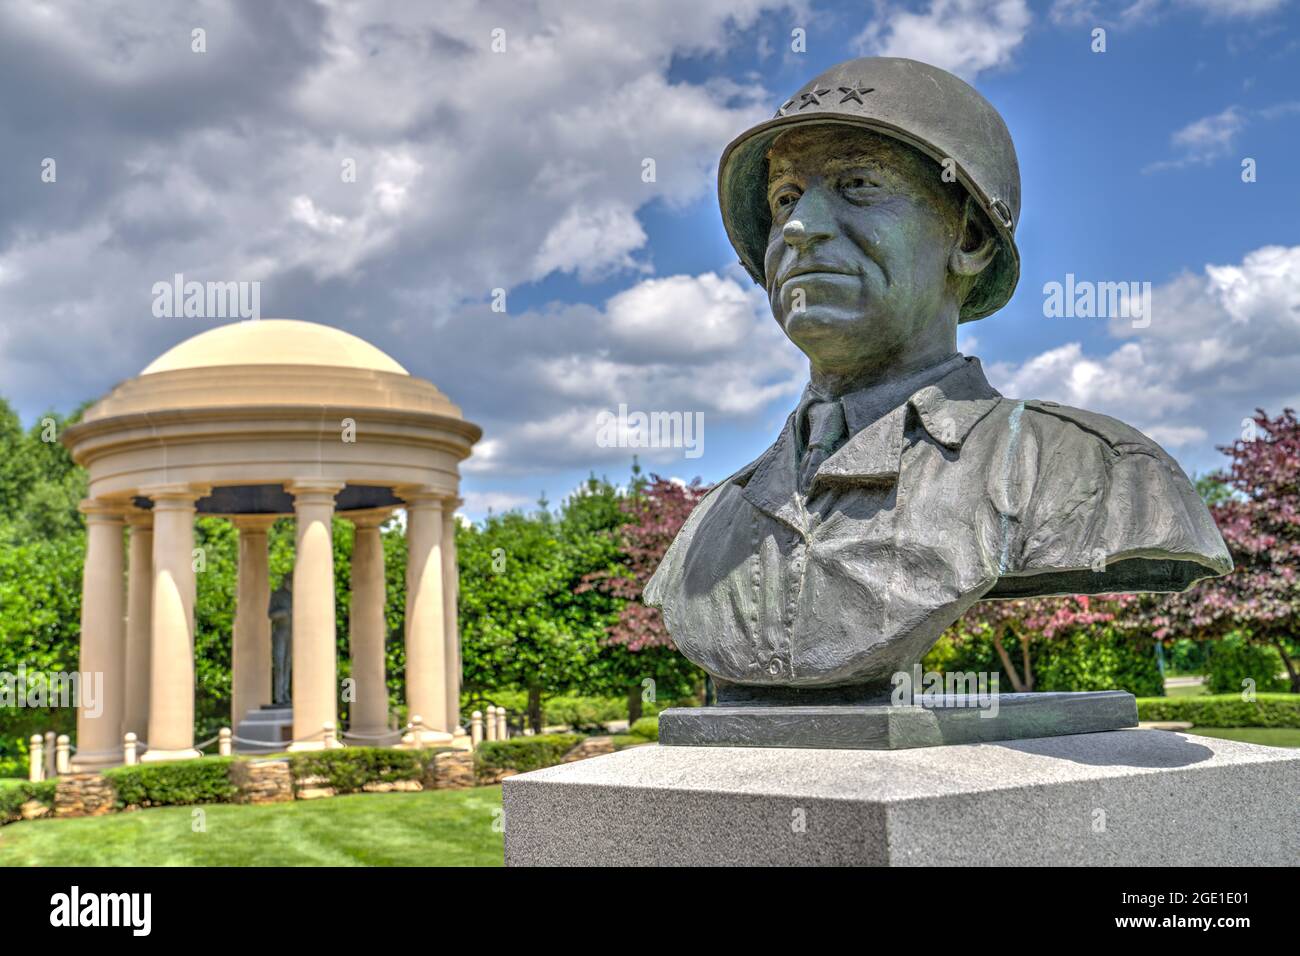 Bust of Lt. General Omar Bradley by the Supreme Commander pavilion in the Richard S. Reynolds Sr. Garden at The National D-Day Memorial in Bedford, Vi Stock Photo